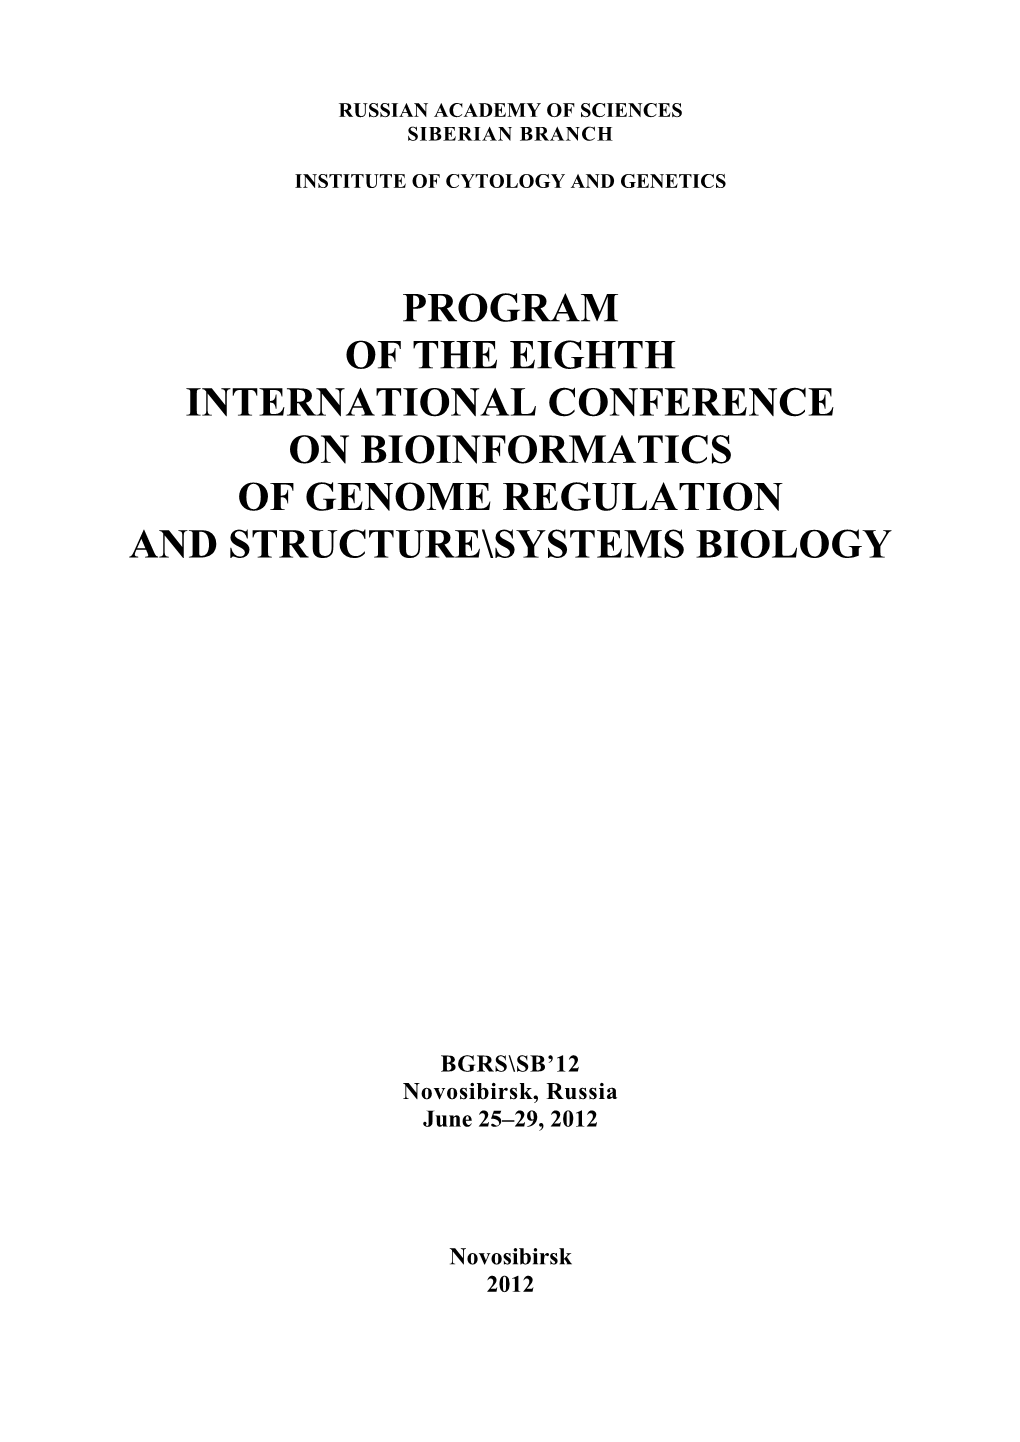 Preliminary Program of the BGRS\SB 2012